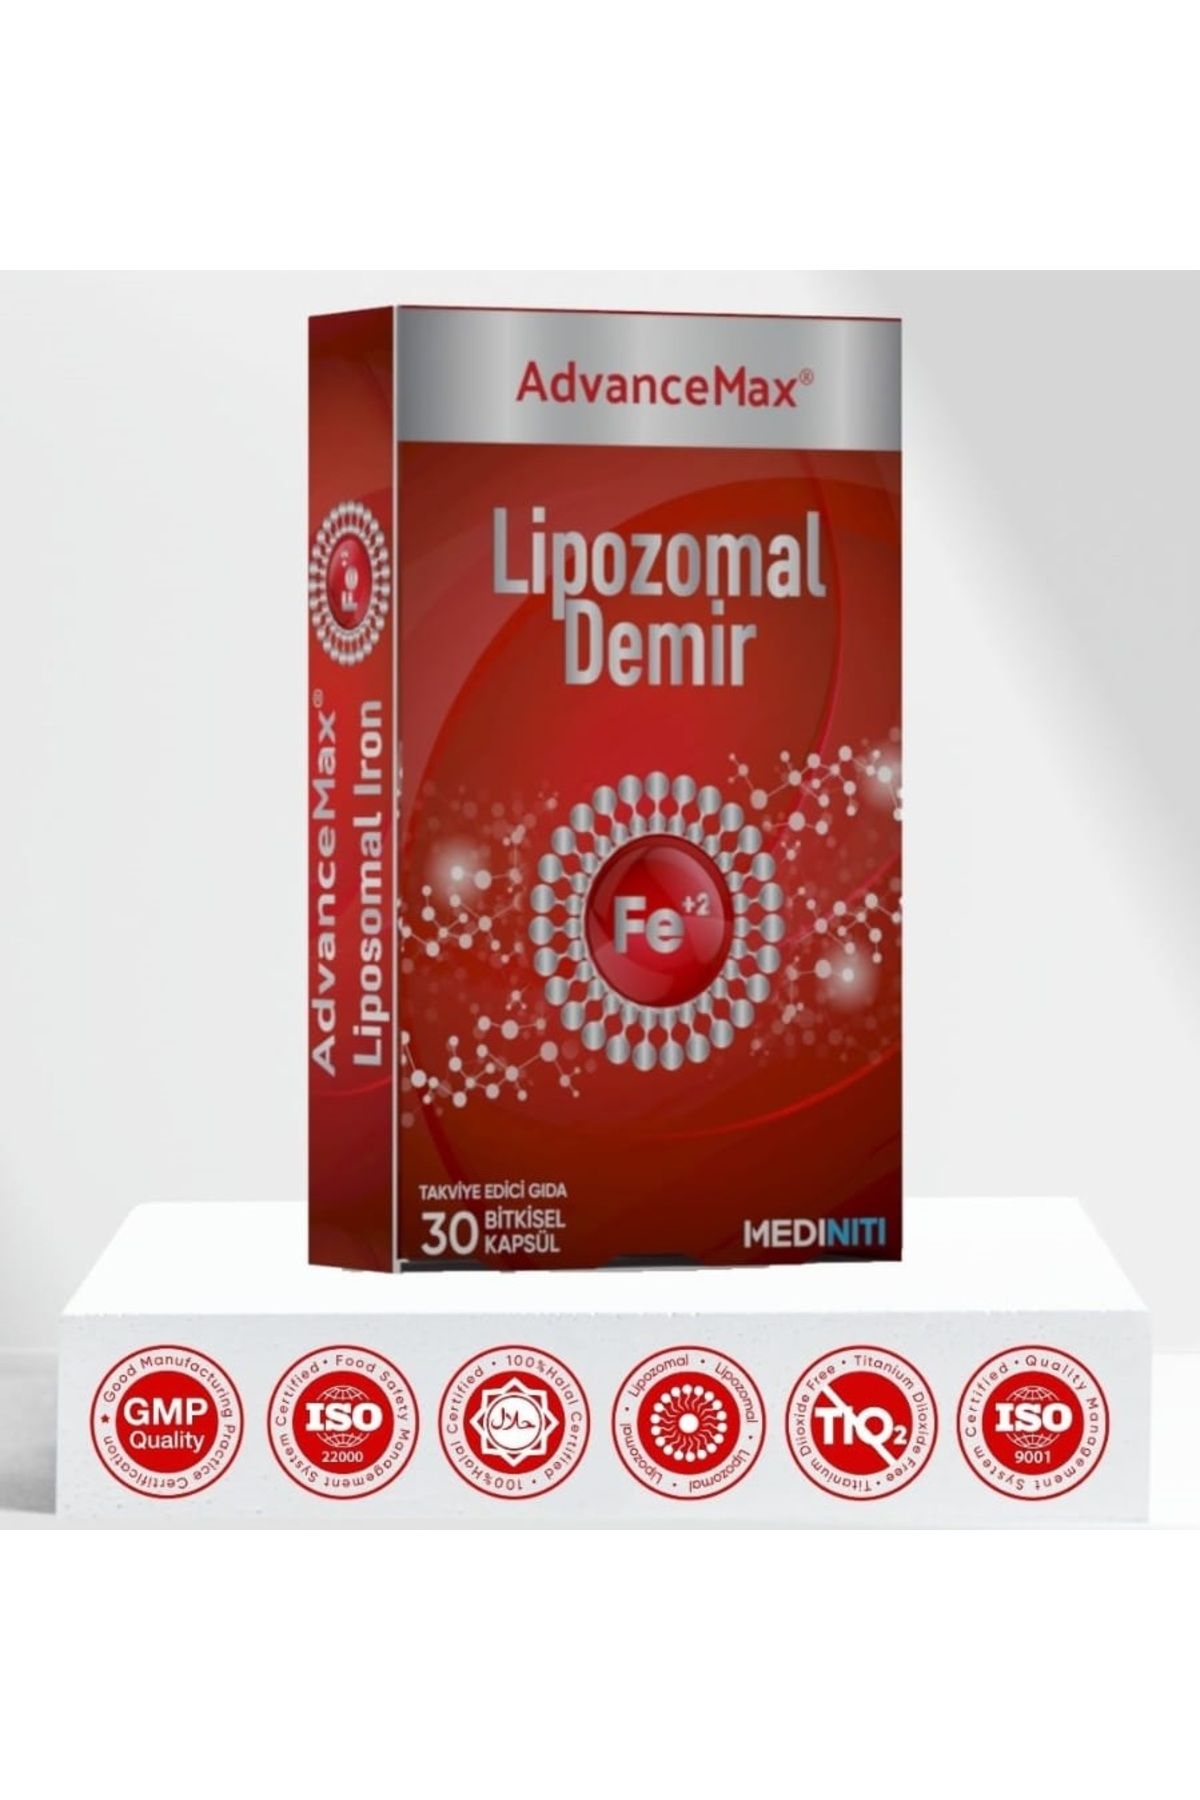 AdvanceMax Lipozomal Demir Kapsül